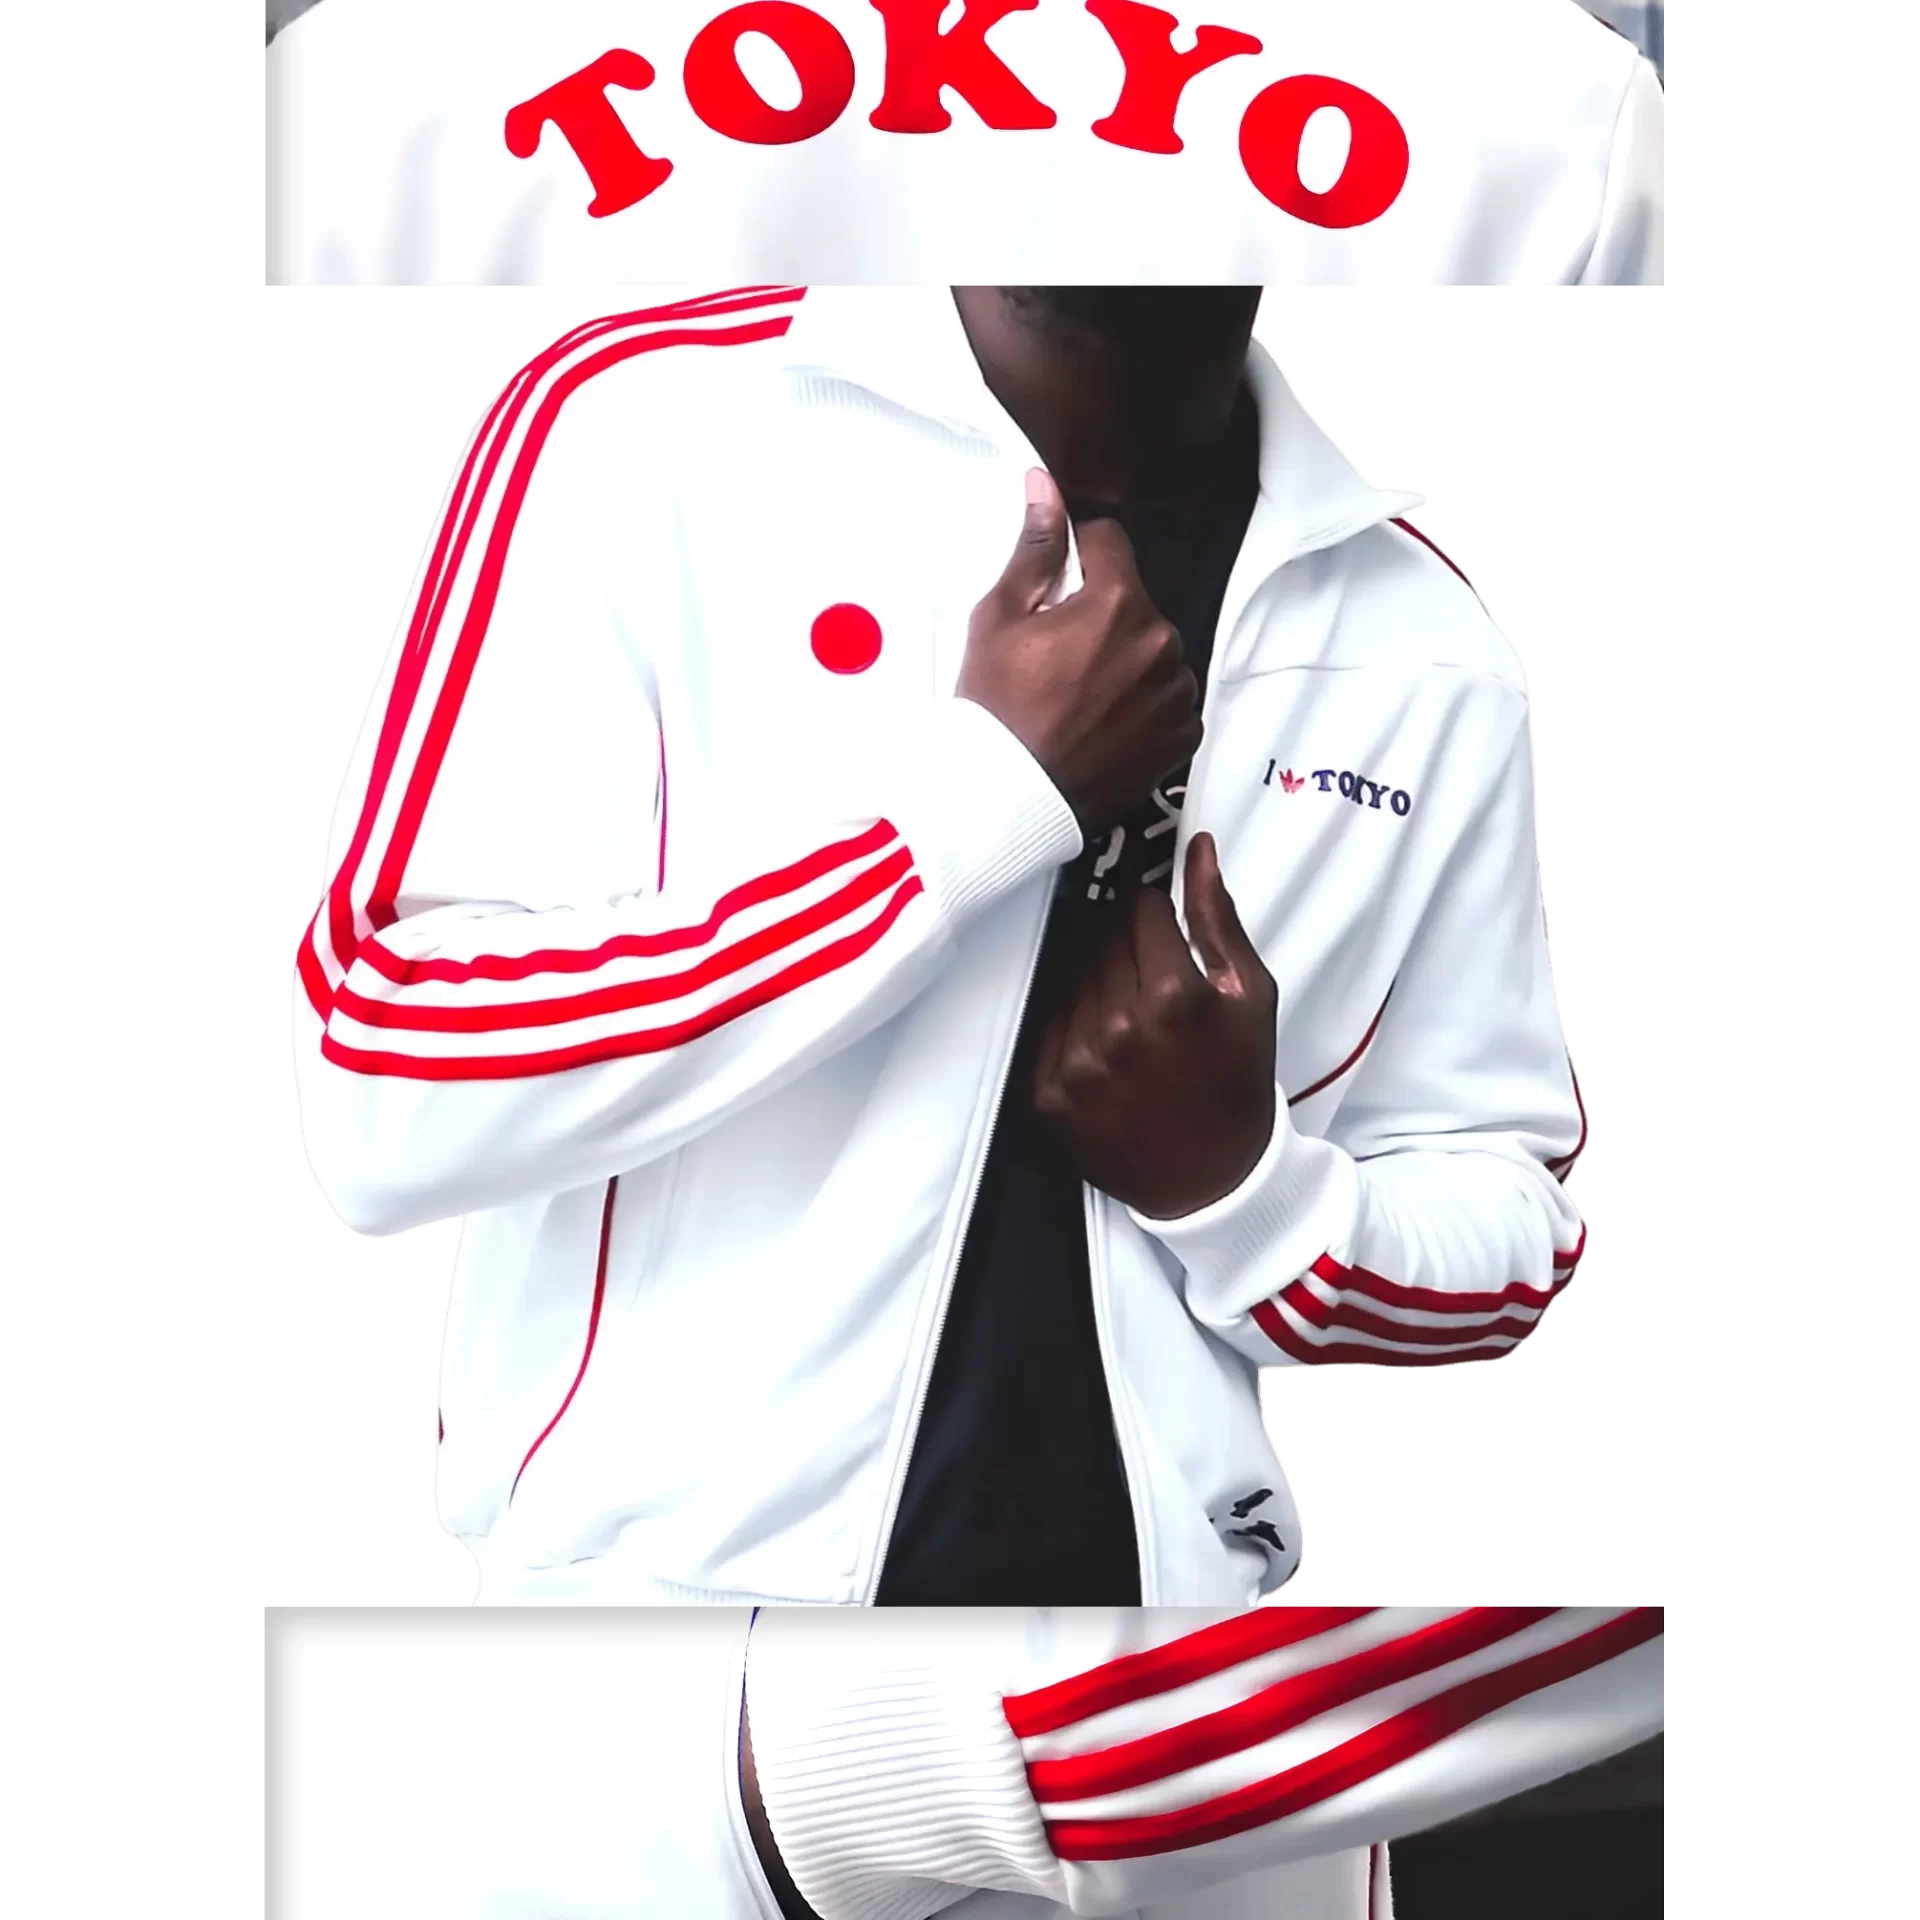 Men’s 2006 Tokyo TT-Two by Adidas Originals: Dazzling (EnLawded.com file #lmchk42528ip2y122011kg9st)